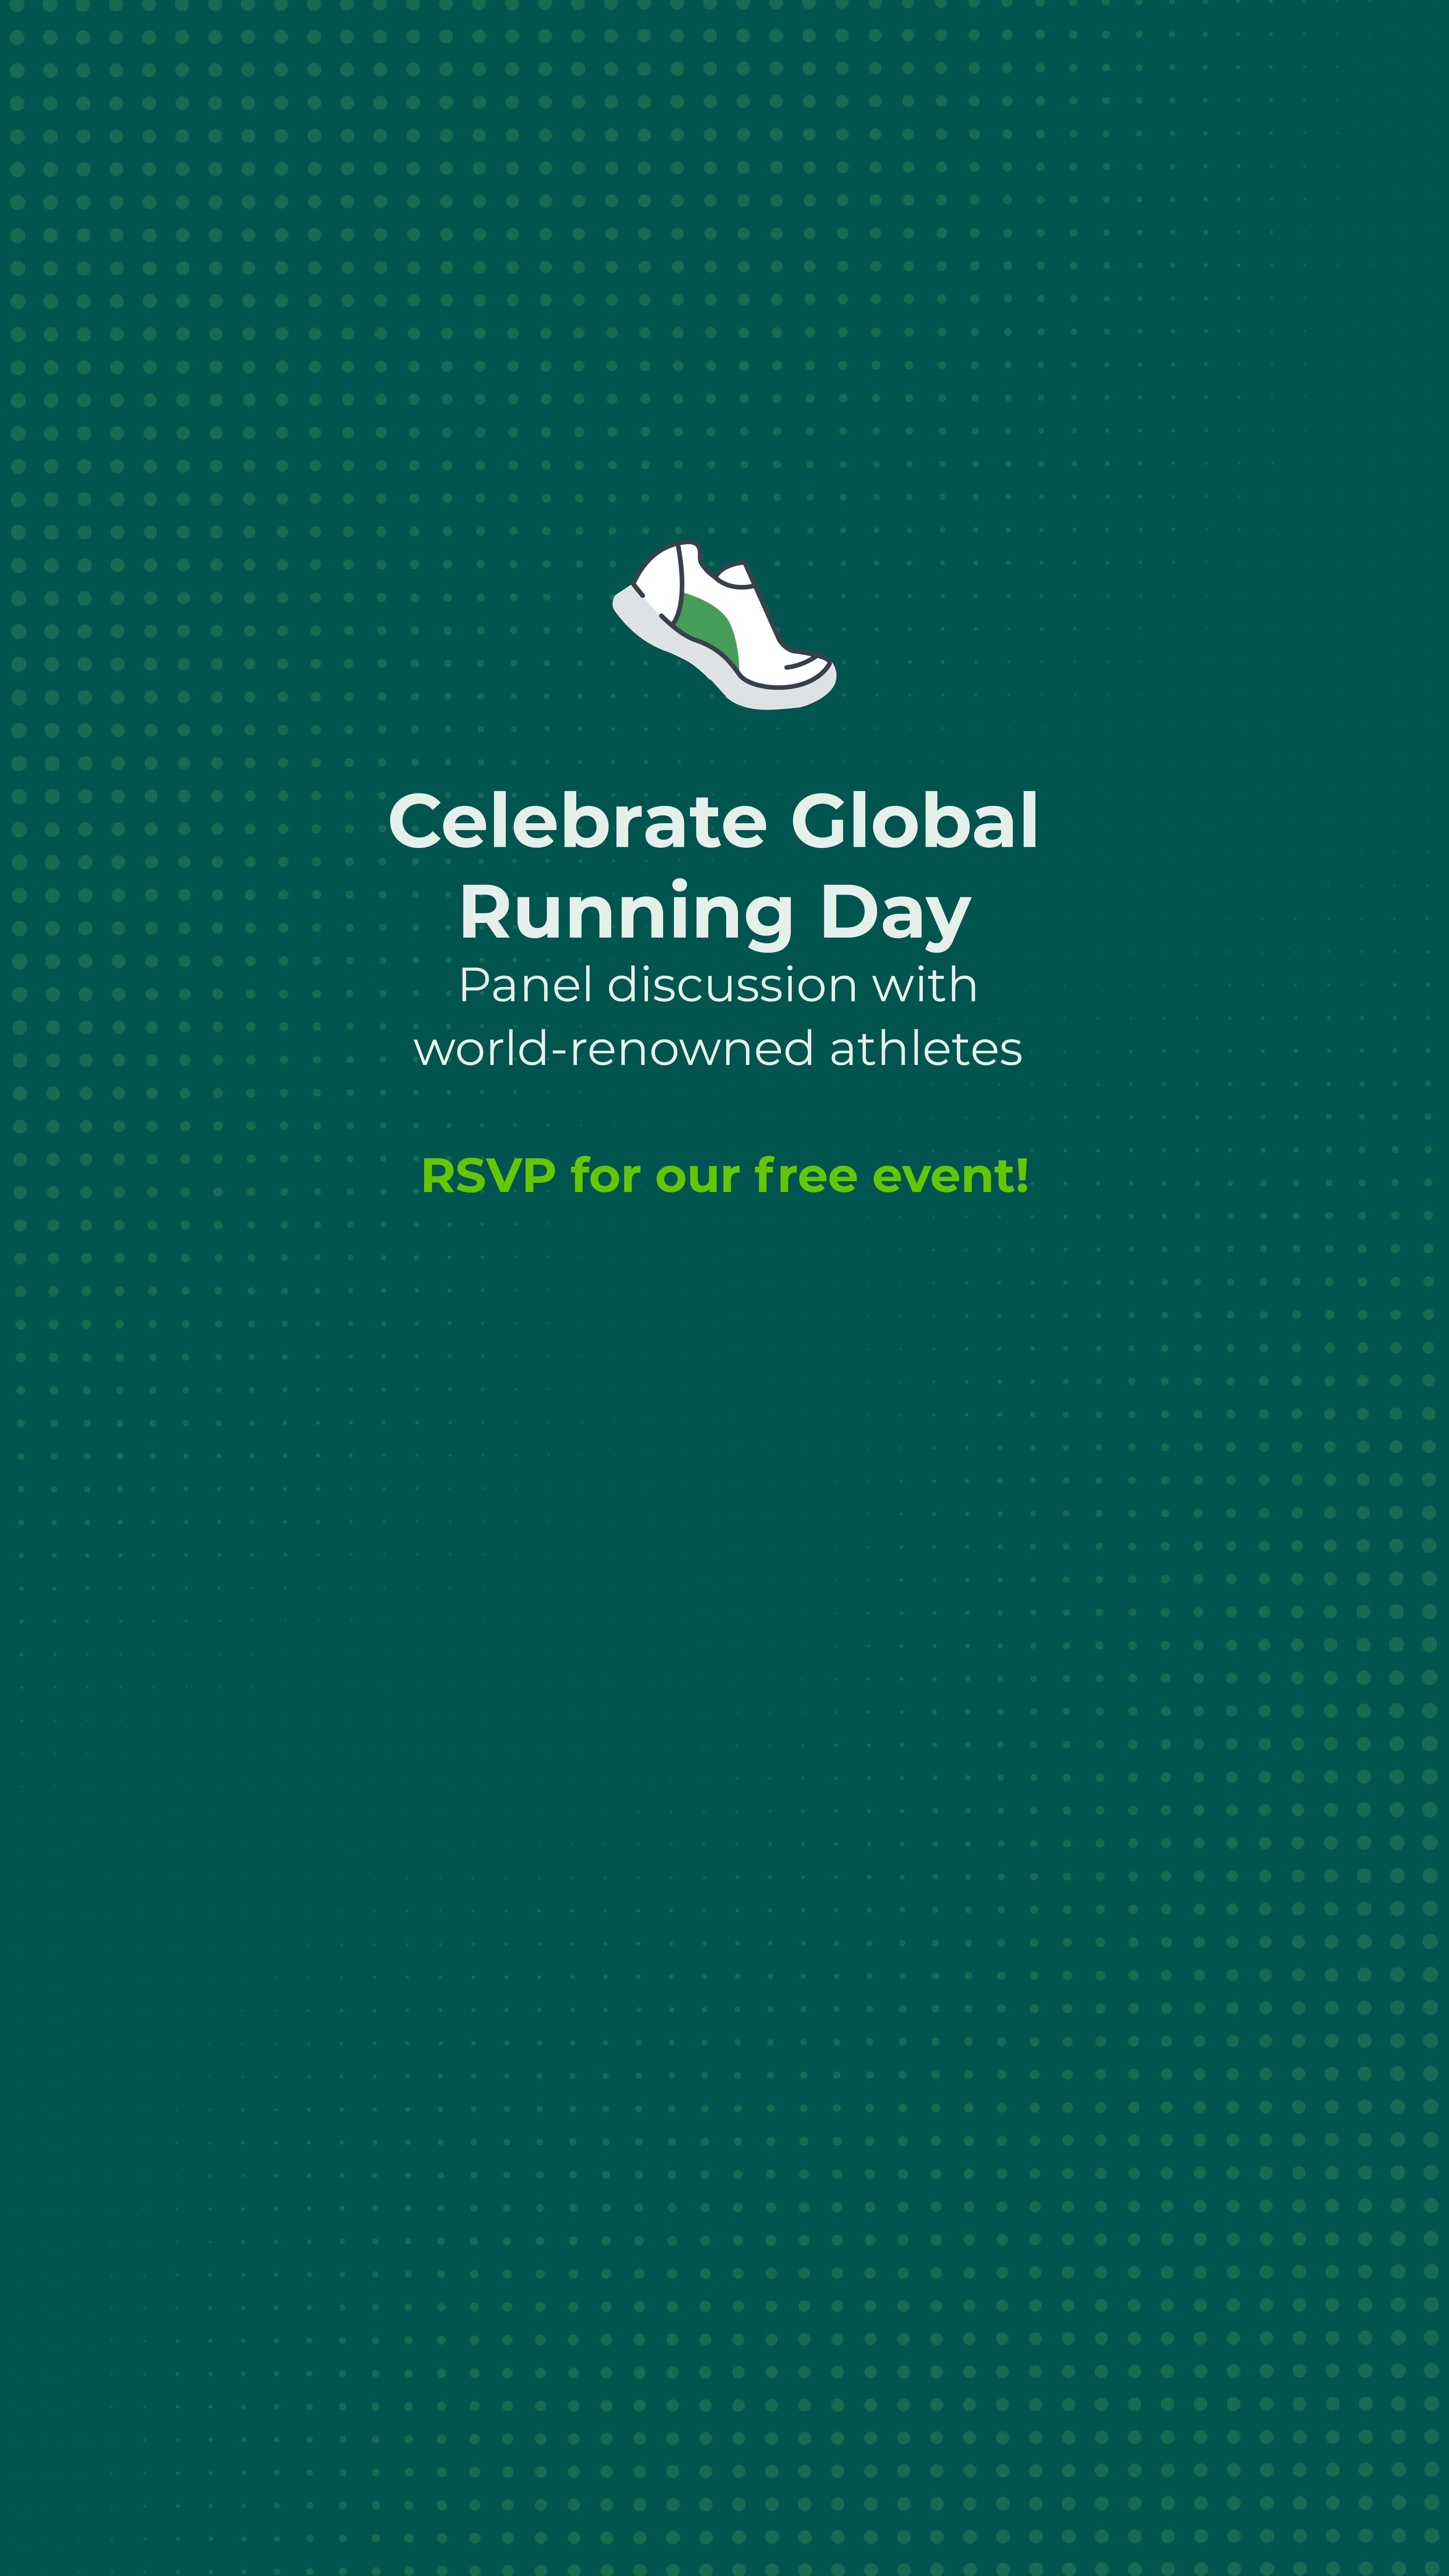 Global Running Day_Landing Page (6)